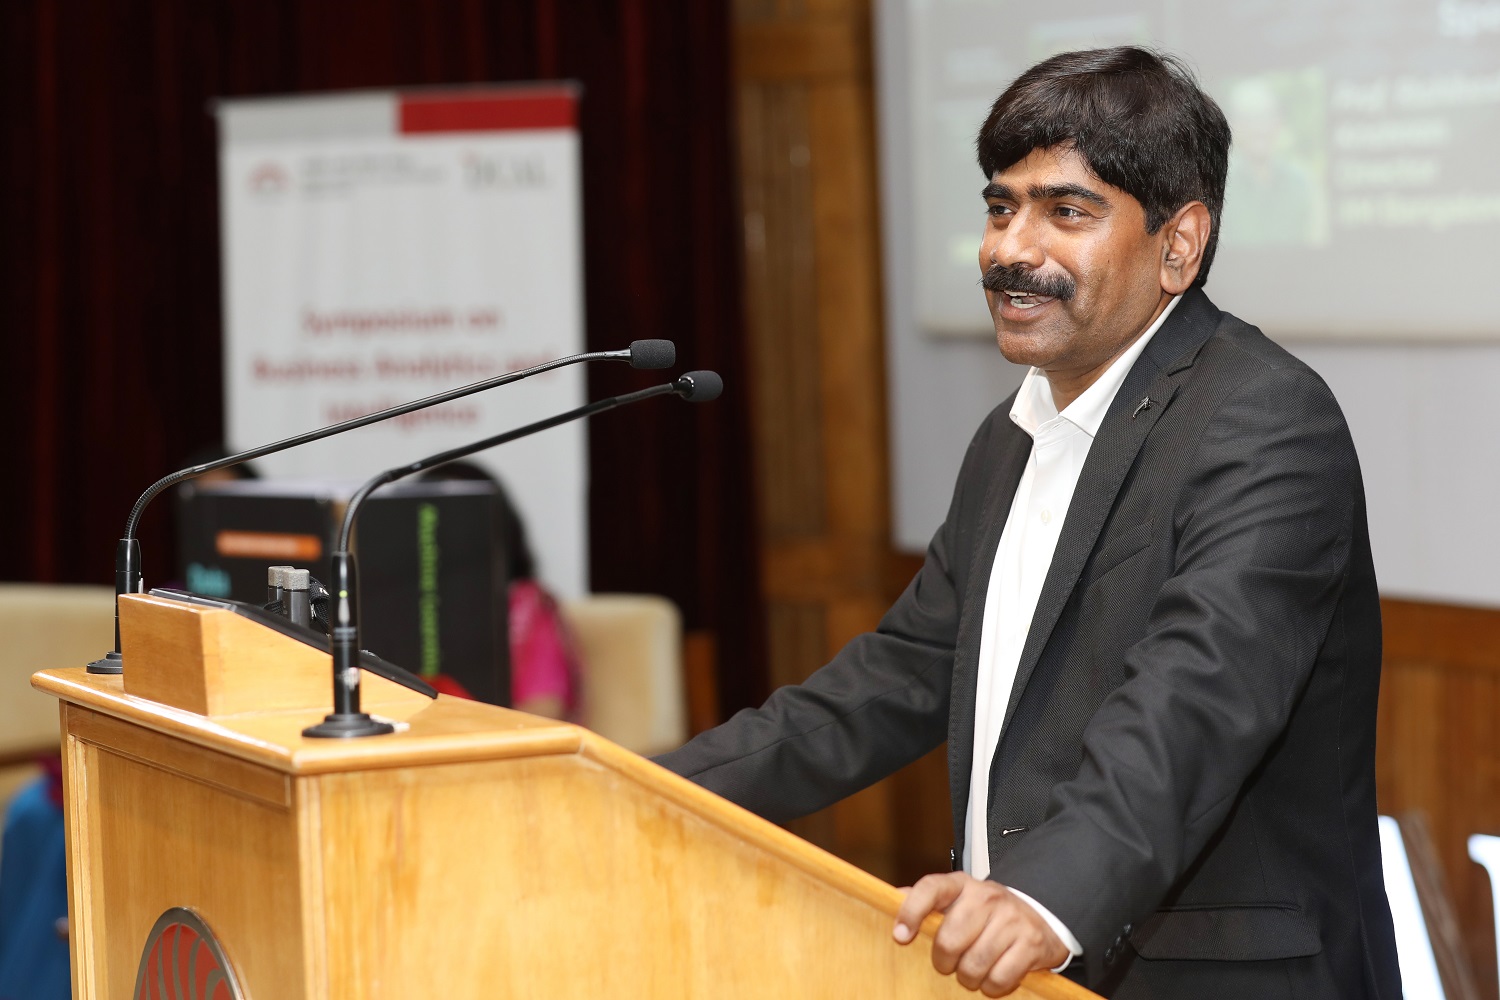 Prof. U Dinesh Kumar, Co-Author, Machine Learning Using R’ and  ‘Data Visualization’, addressed the audience.